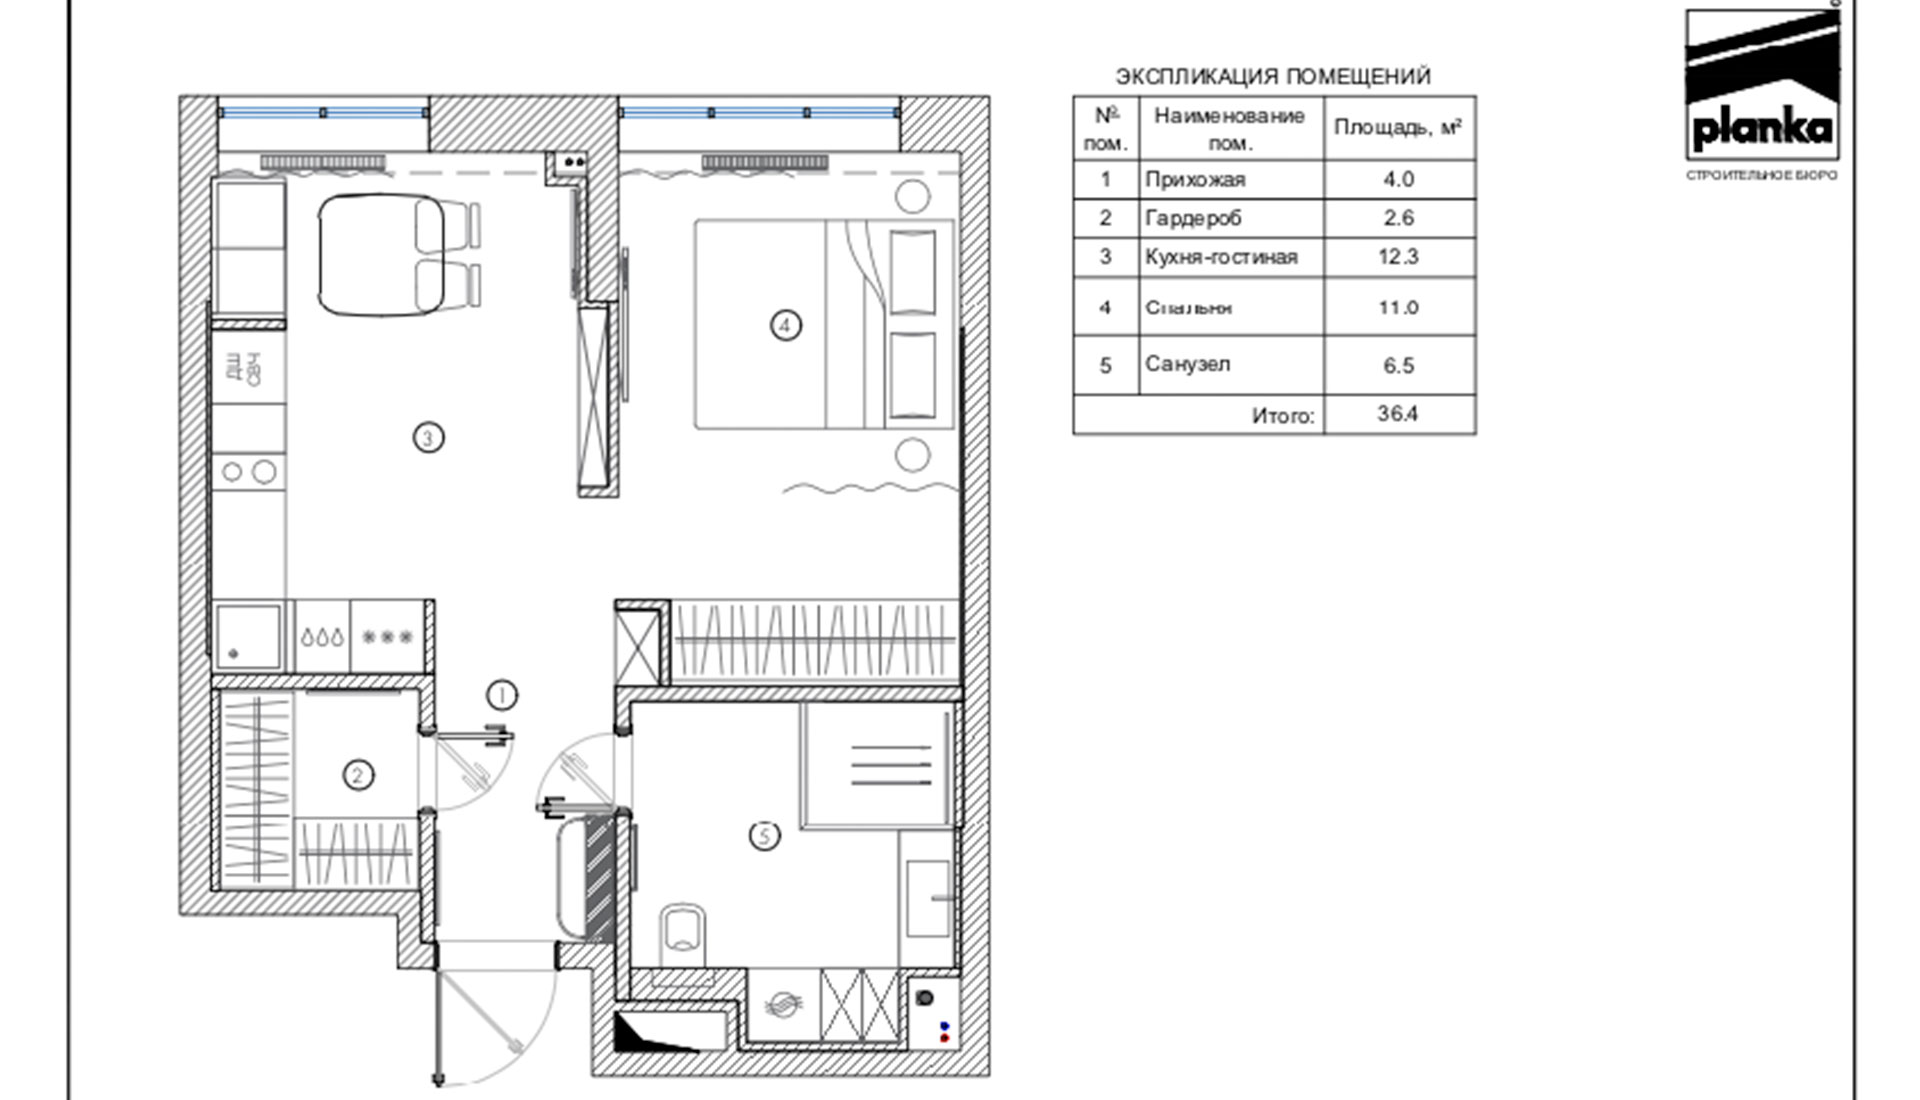 Planka,公寓设计,小户型设计案例,小公寓设计,单身公寓,原木色+白色,莫斯科,36㎡